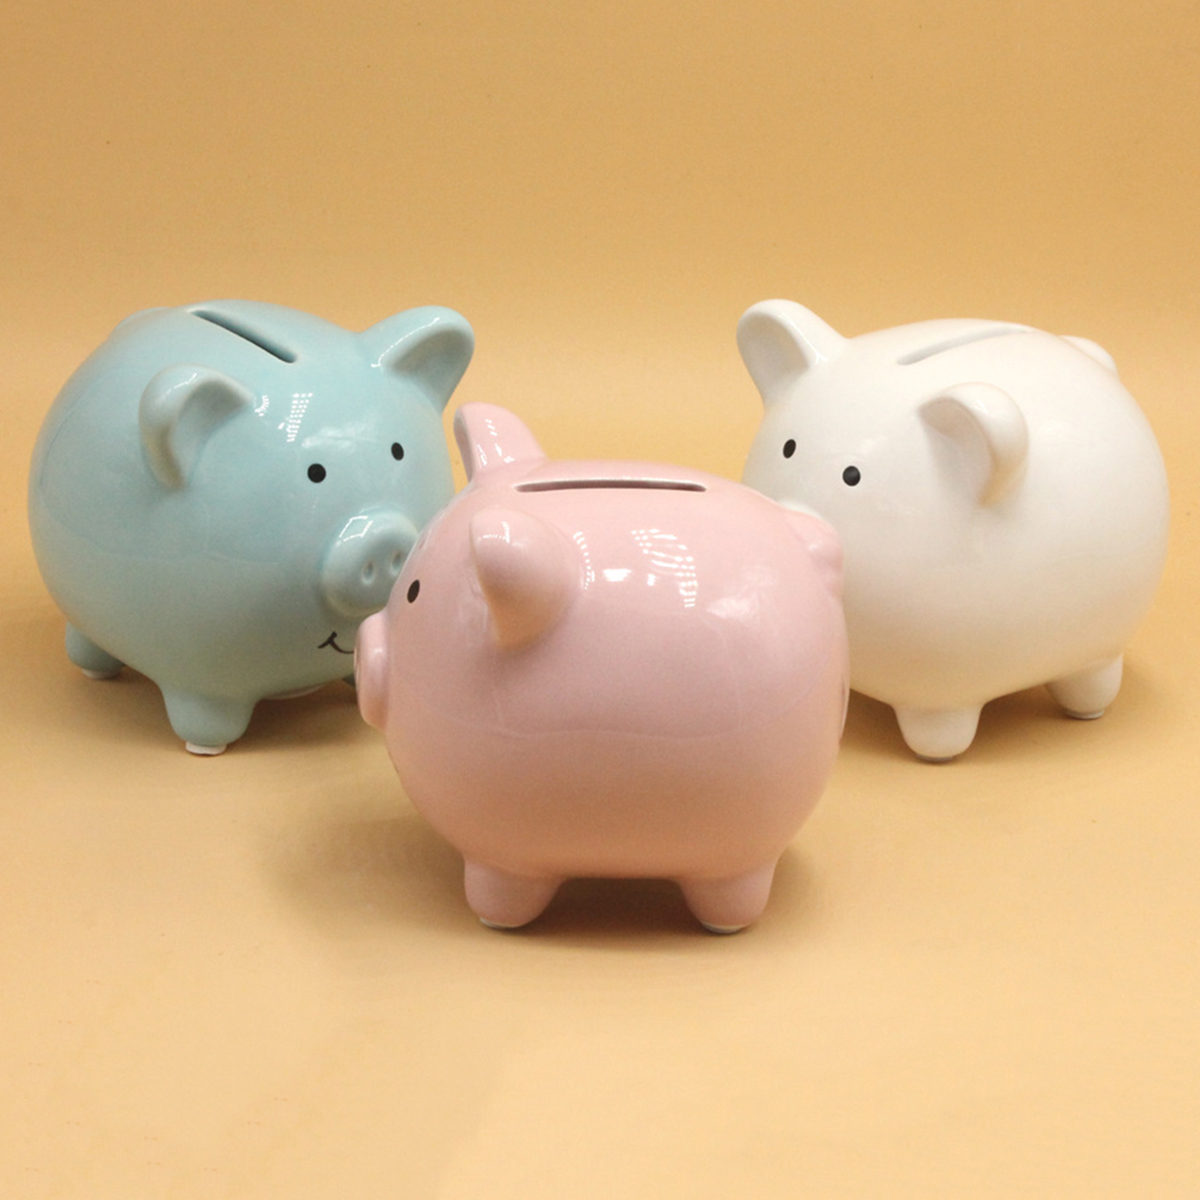 Piggy-Bank-Ceramic-Coin-Money-Saving-Box-Cash-Storage-Holder-Kids-Gift-1502098